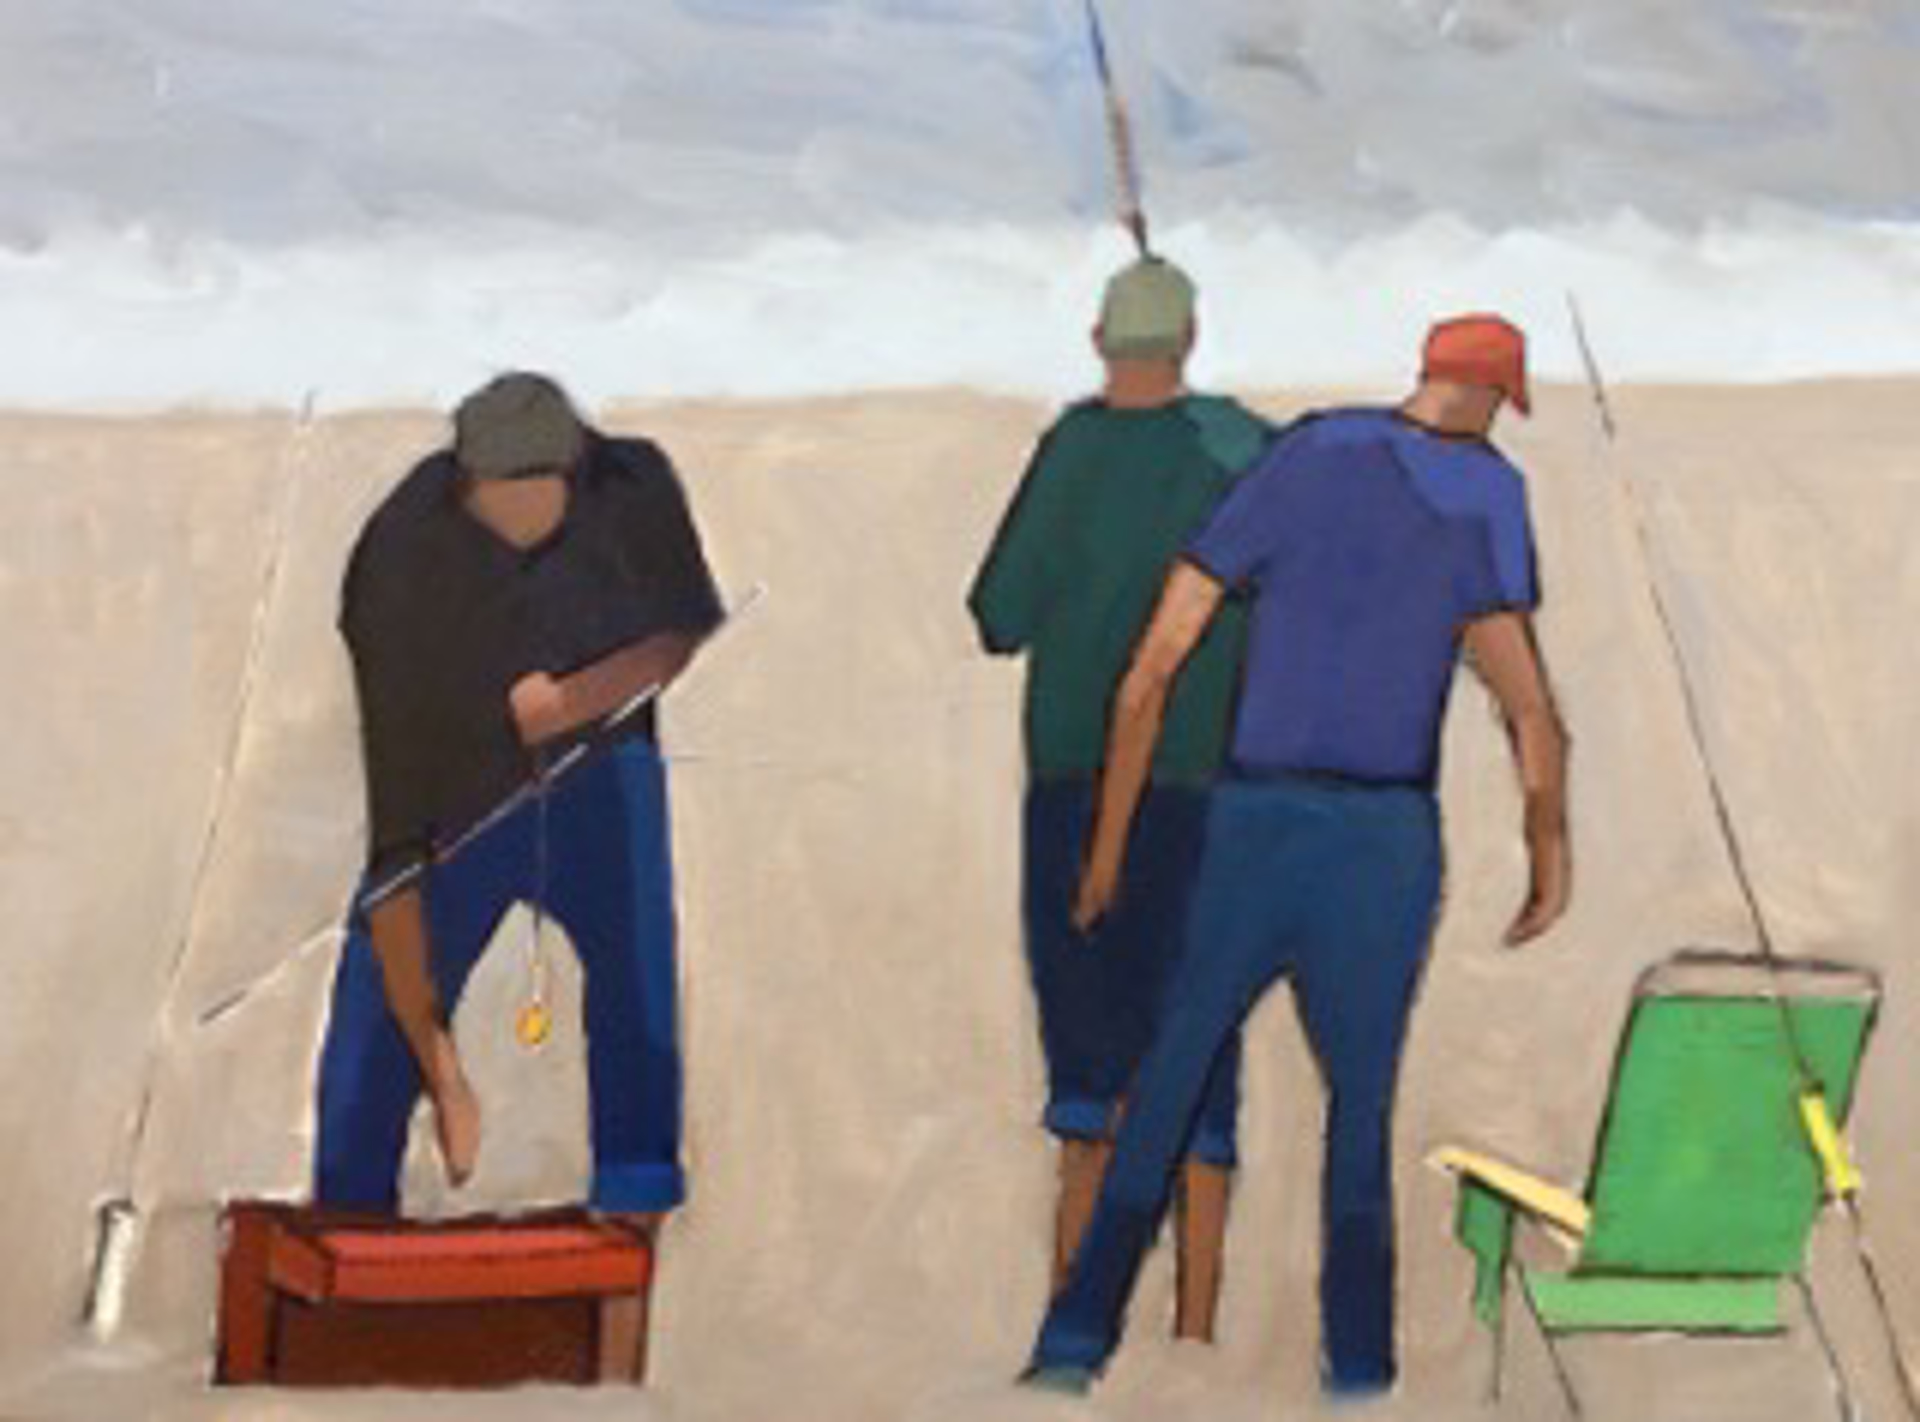 Surf Casters by Nancy Colella